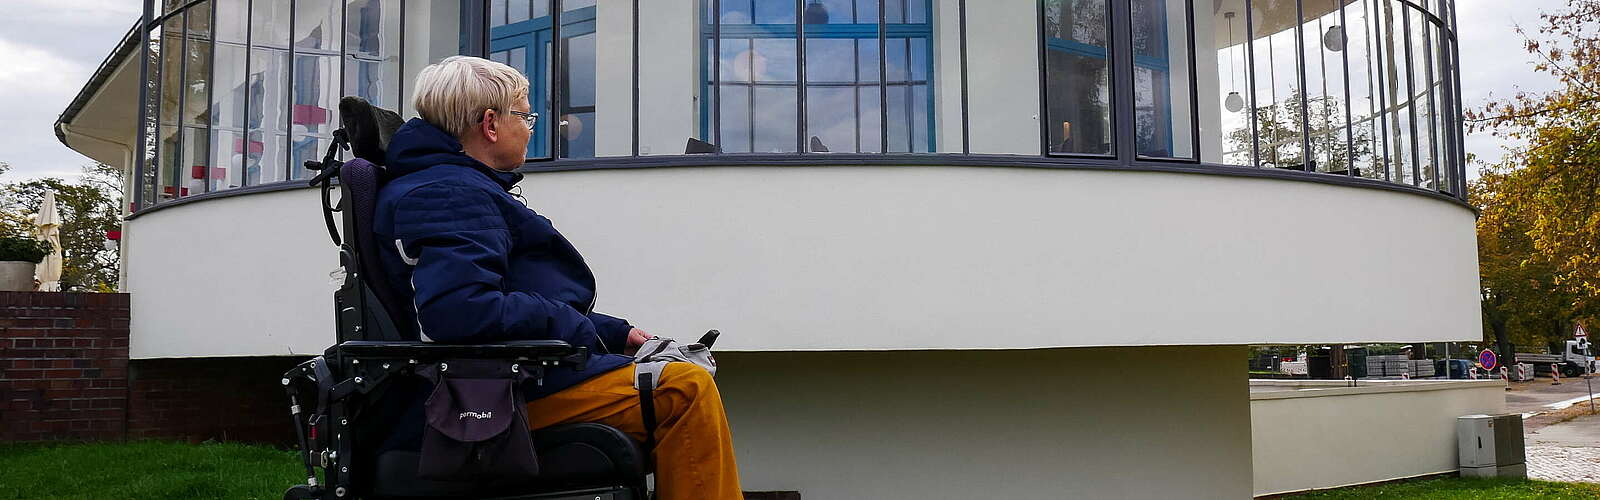 Frau im Rollstuhl am Kornhaus in Dessau,
        
    

        Foto: Welterberegion/Anja Knorr